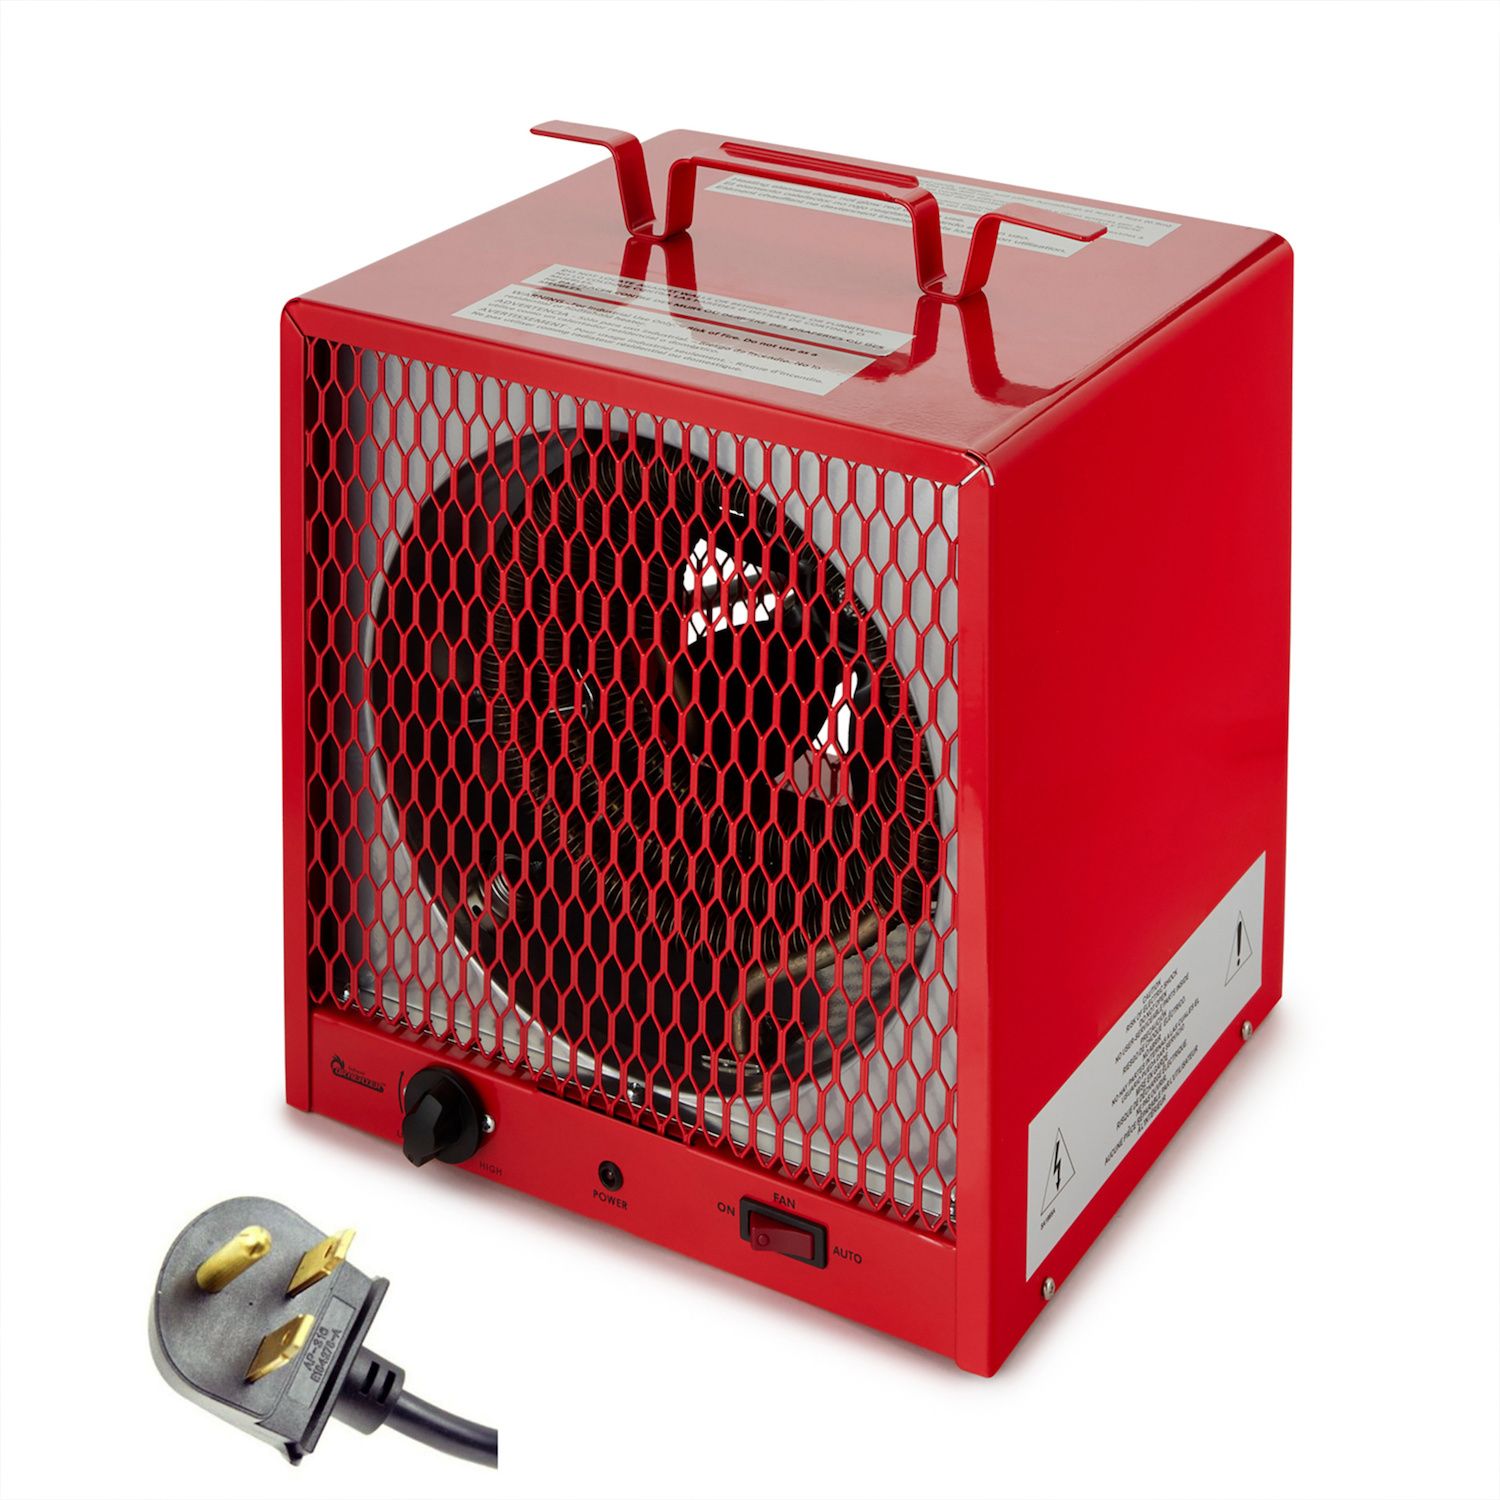 Image for Dr. Infrared Heater Dr. Heater 240 Volt 5600 Watt Garage Workshop Portable Industrial Space Heater at Kohl's.